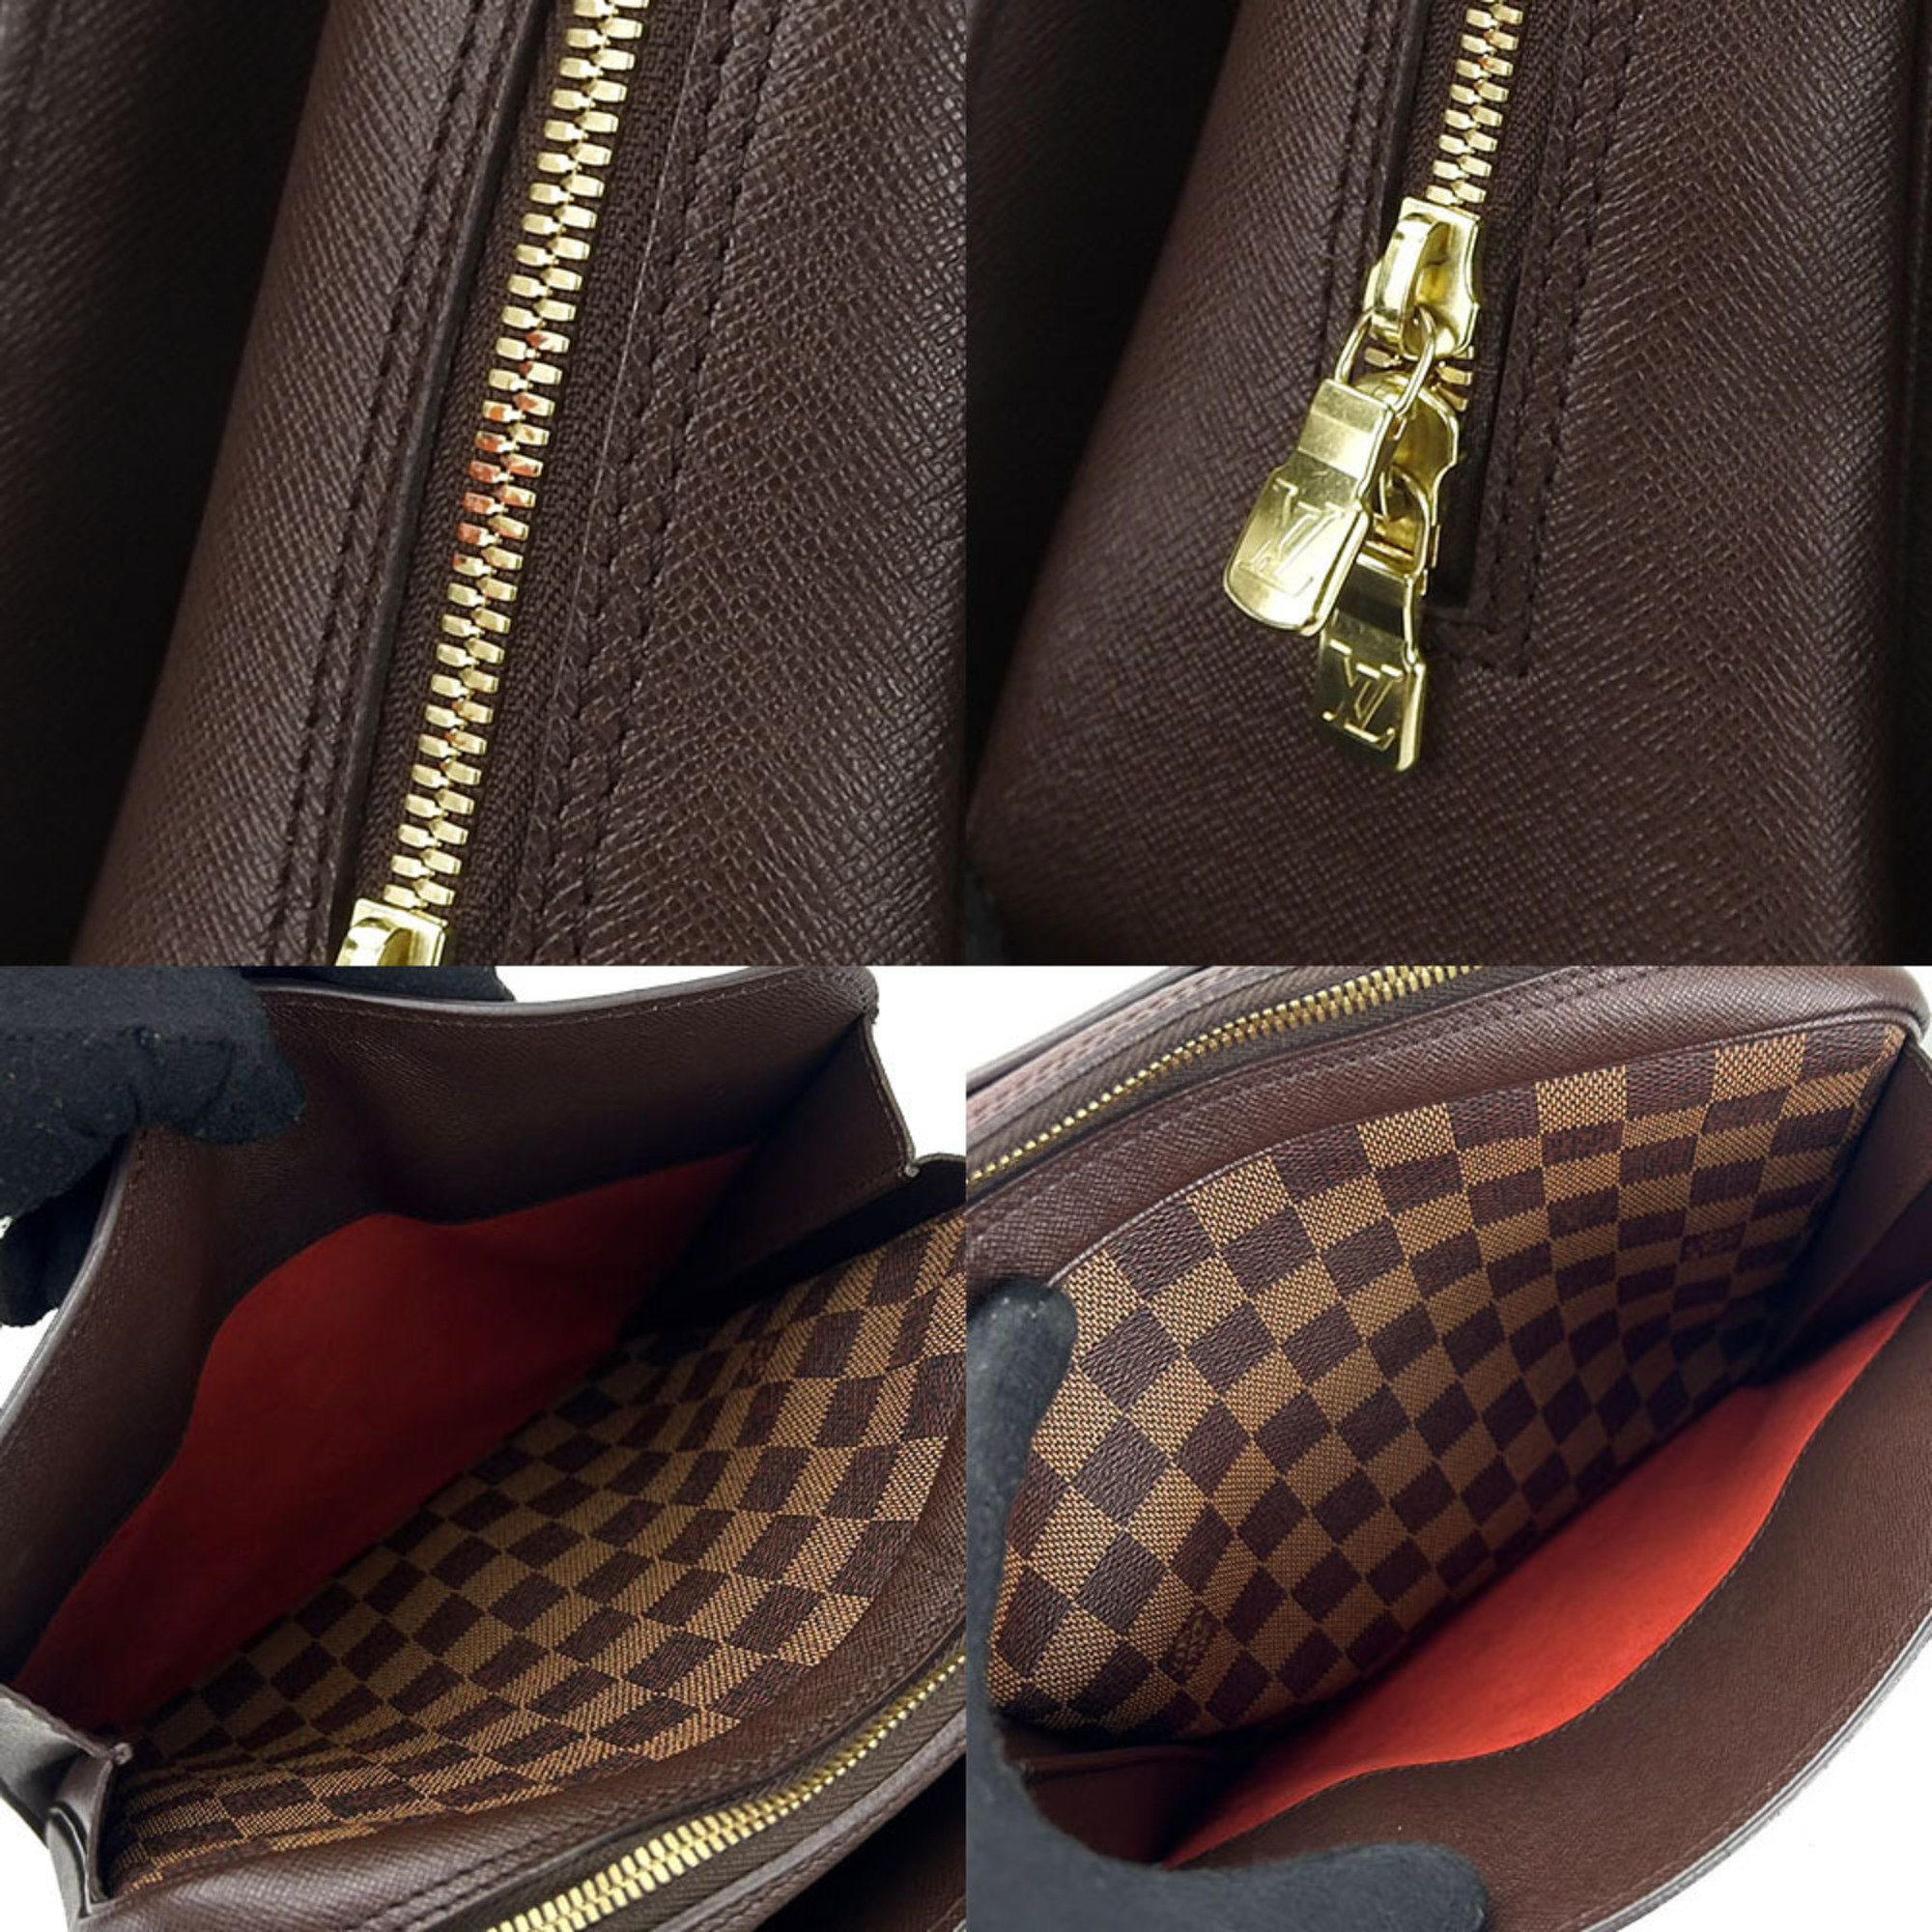 Louis Vuitton Handbag Triana N51155 Damier Ebene Leather Women's LV LOUIS VUITTON hand bag leather pvc